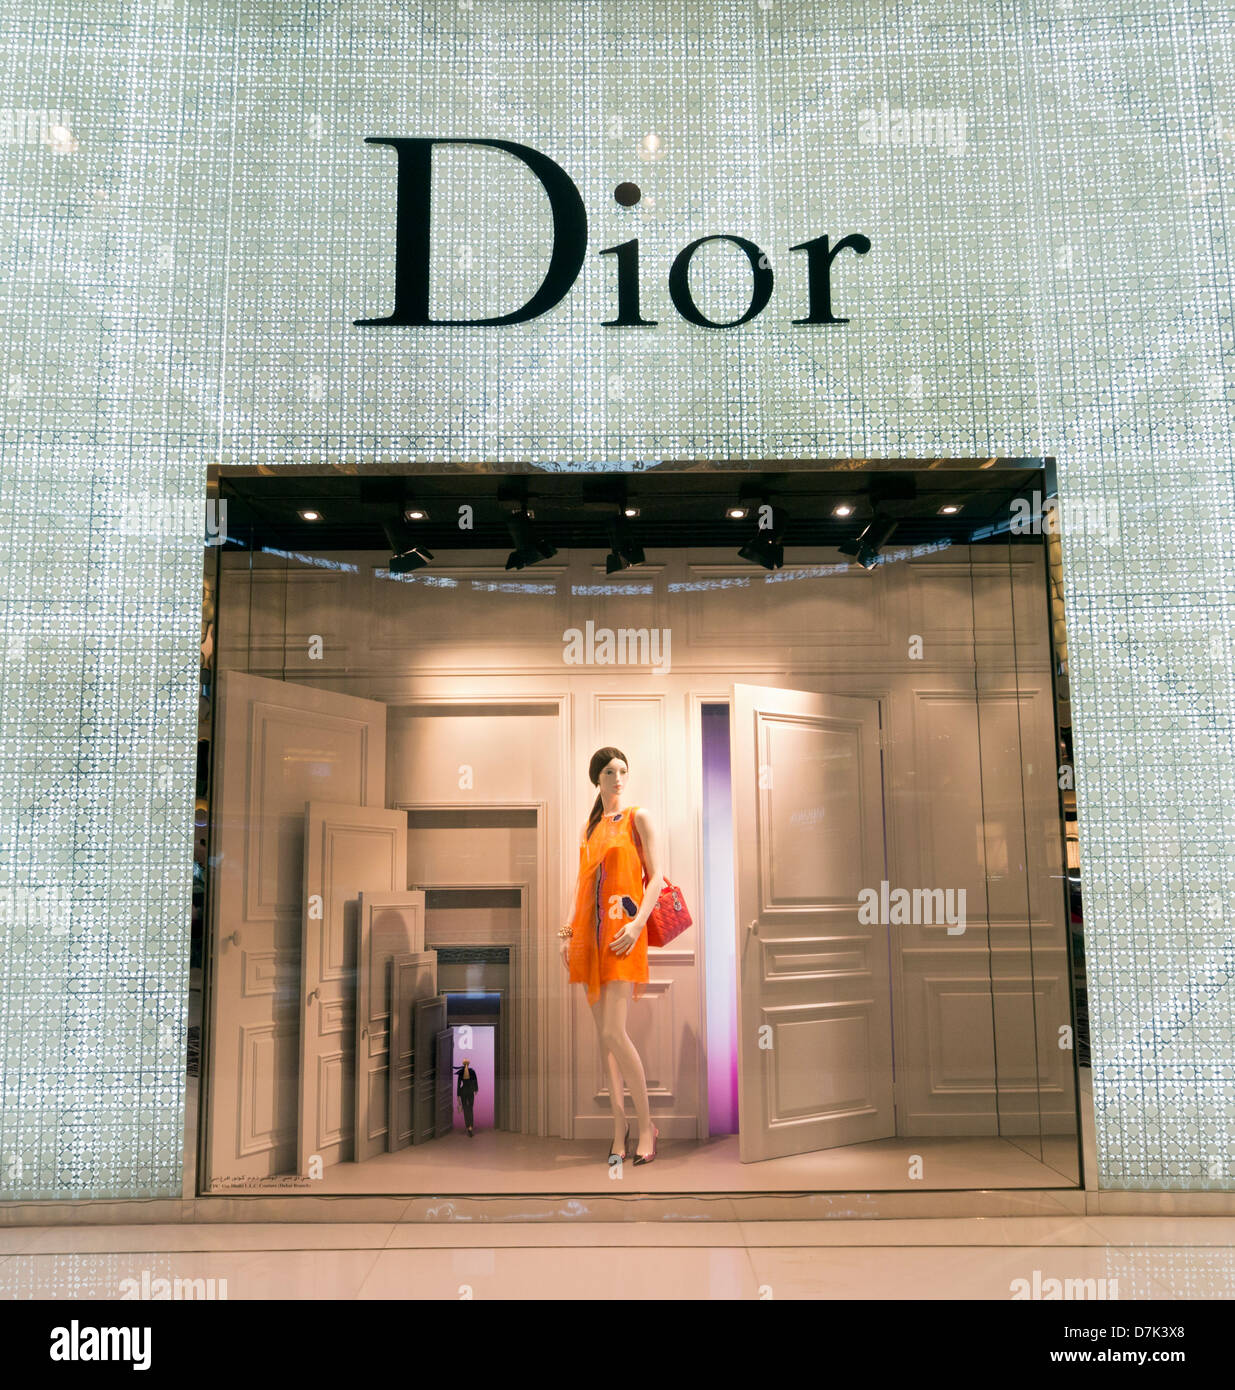 Dior boutique window display at The Dubai Mall in Dubai United Arab Emirates Stock Photo